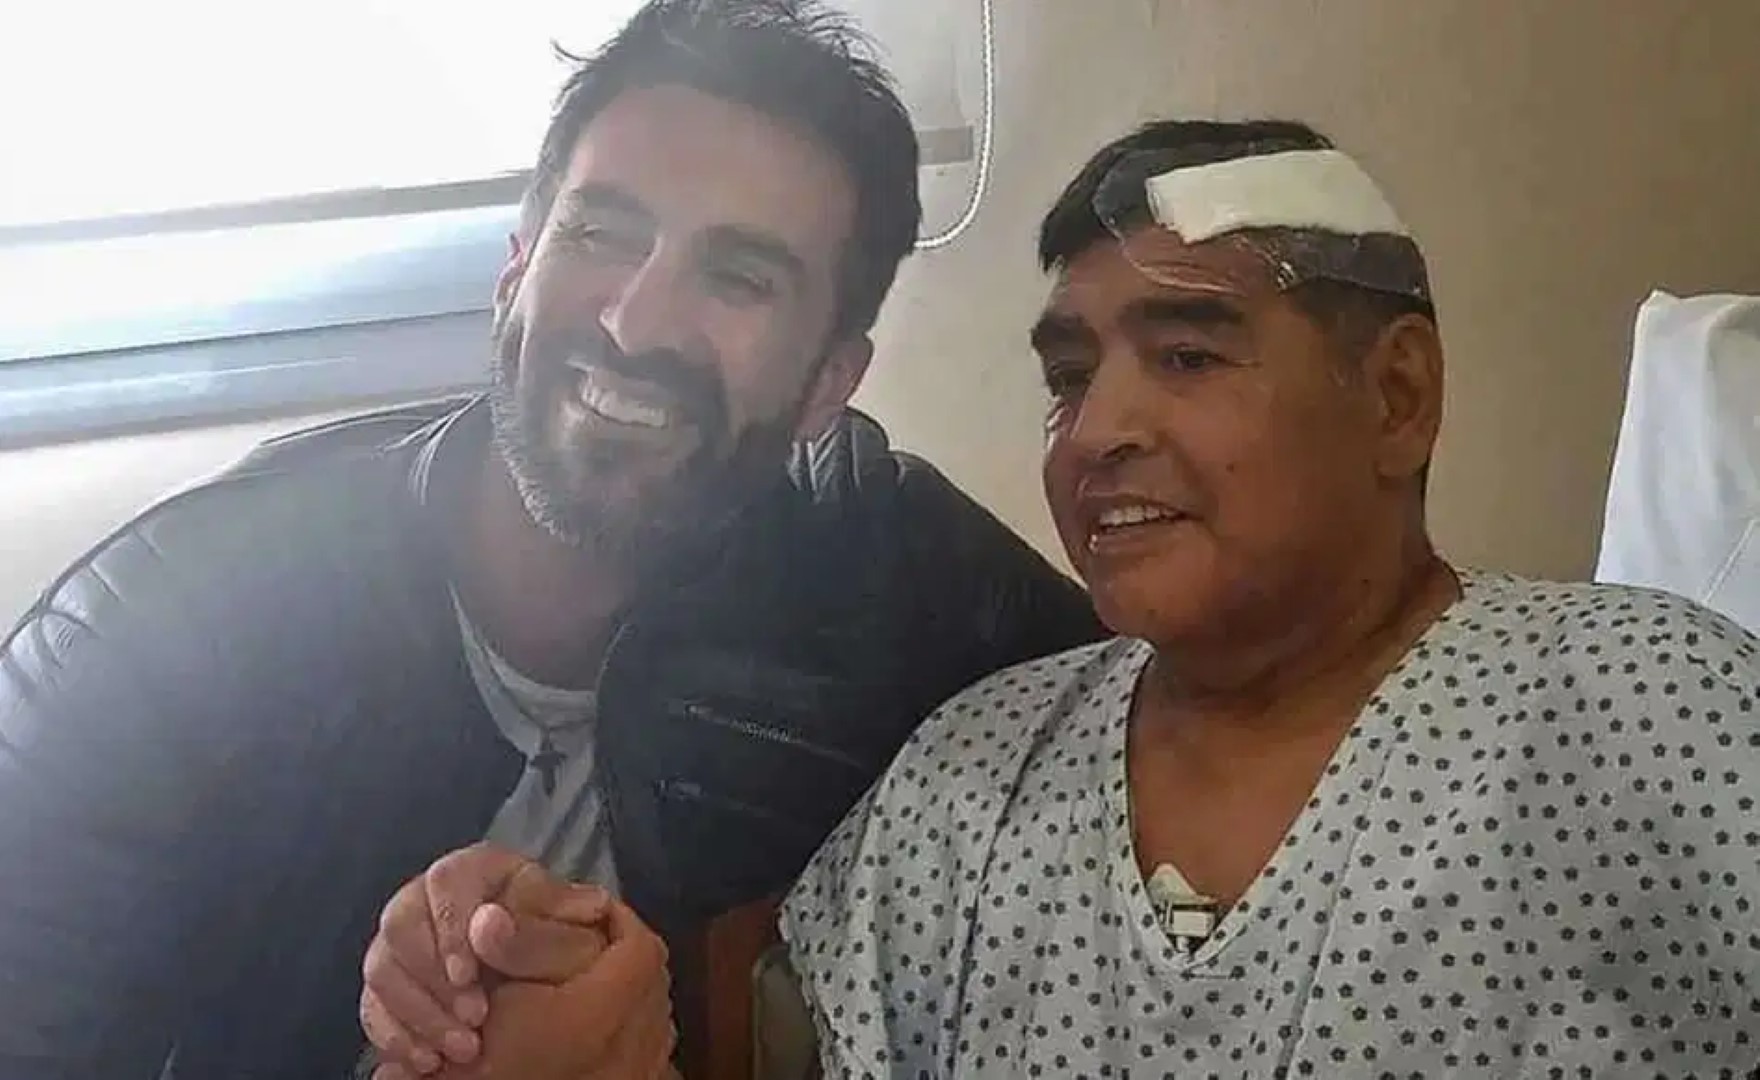 "Diego, te vas a morir", filtran audio previo a la muerte de Maradona